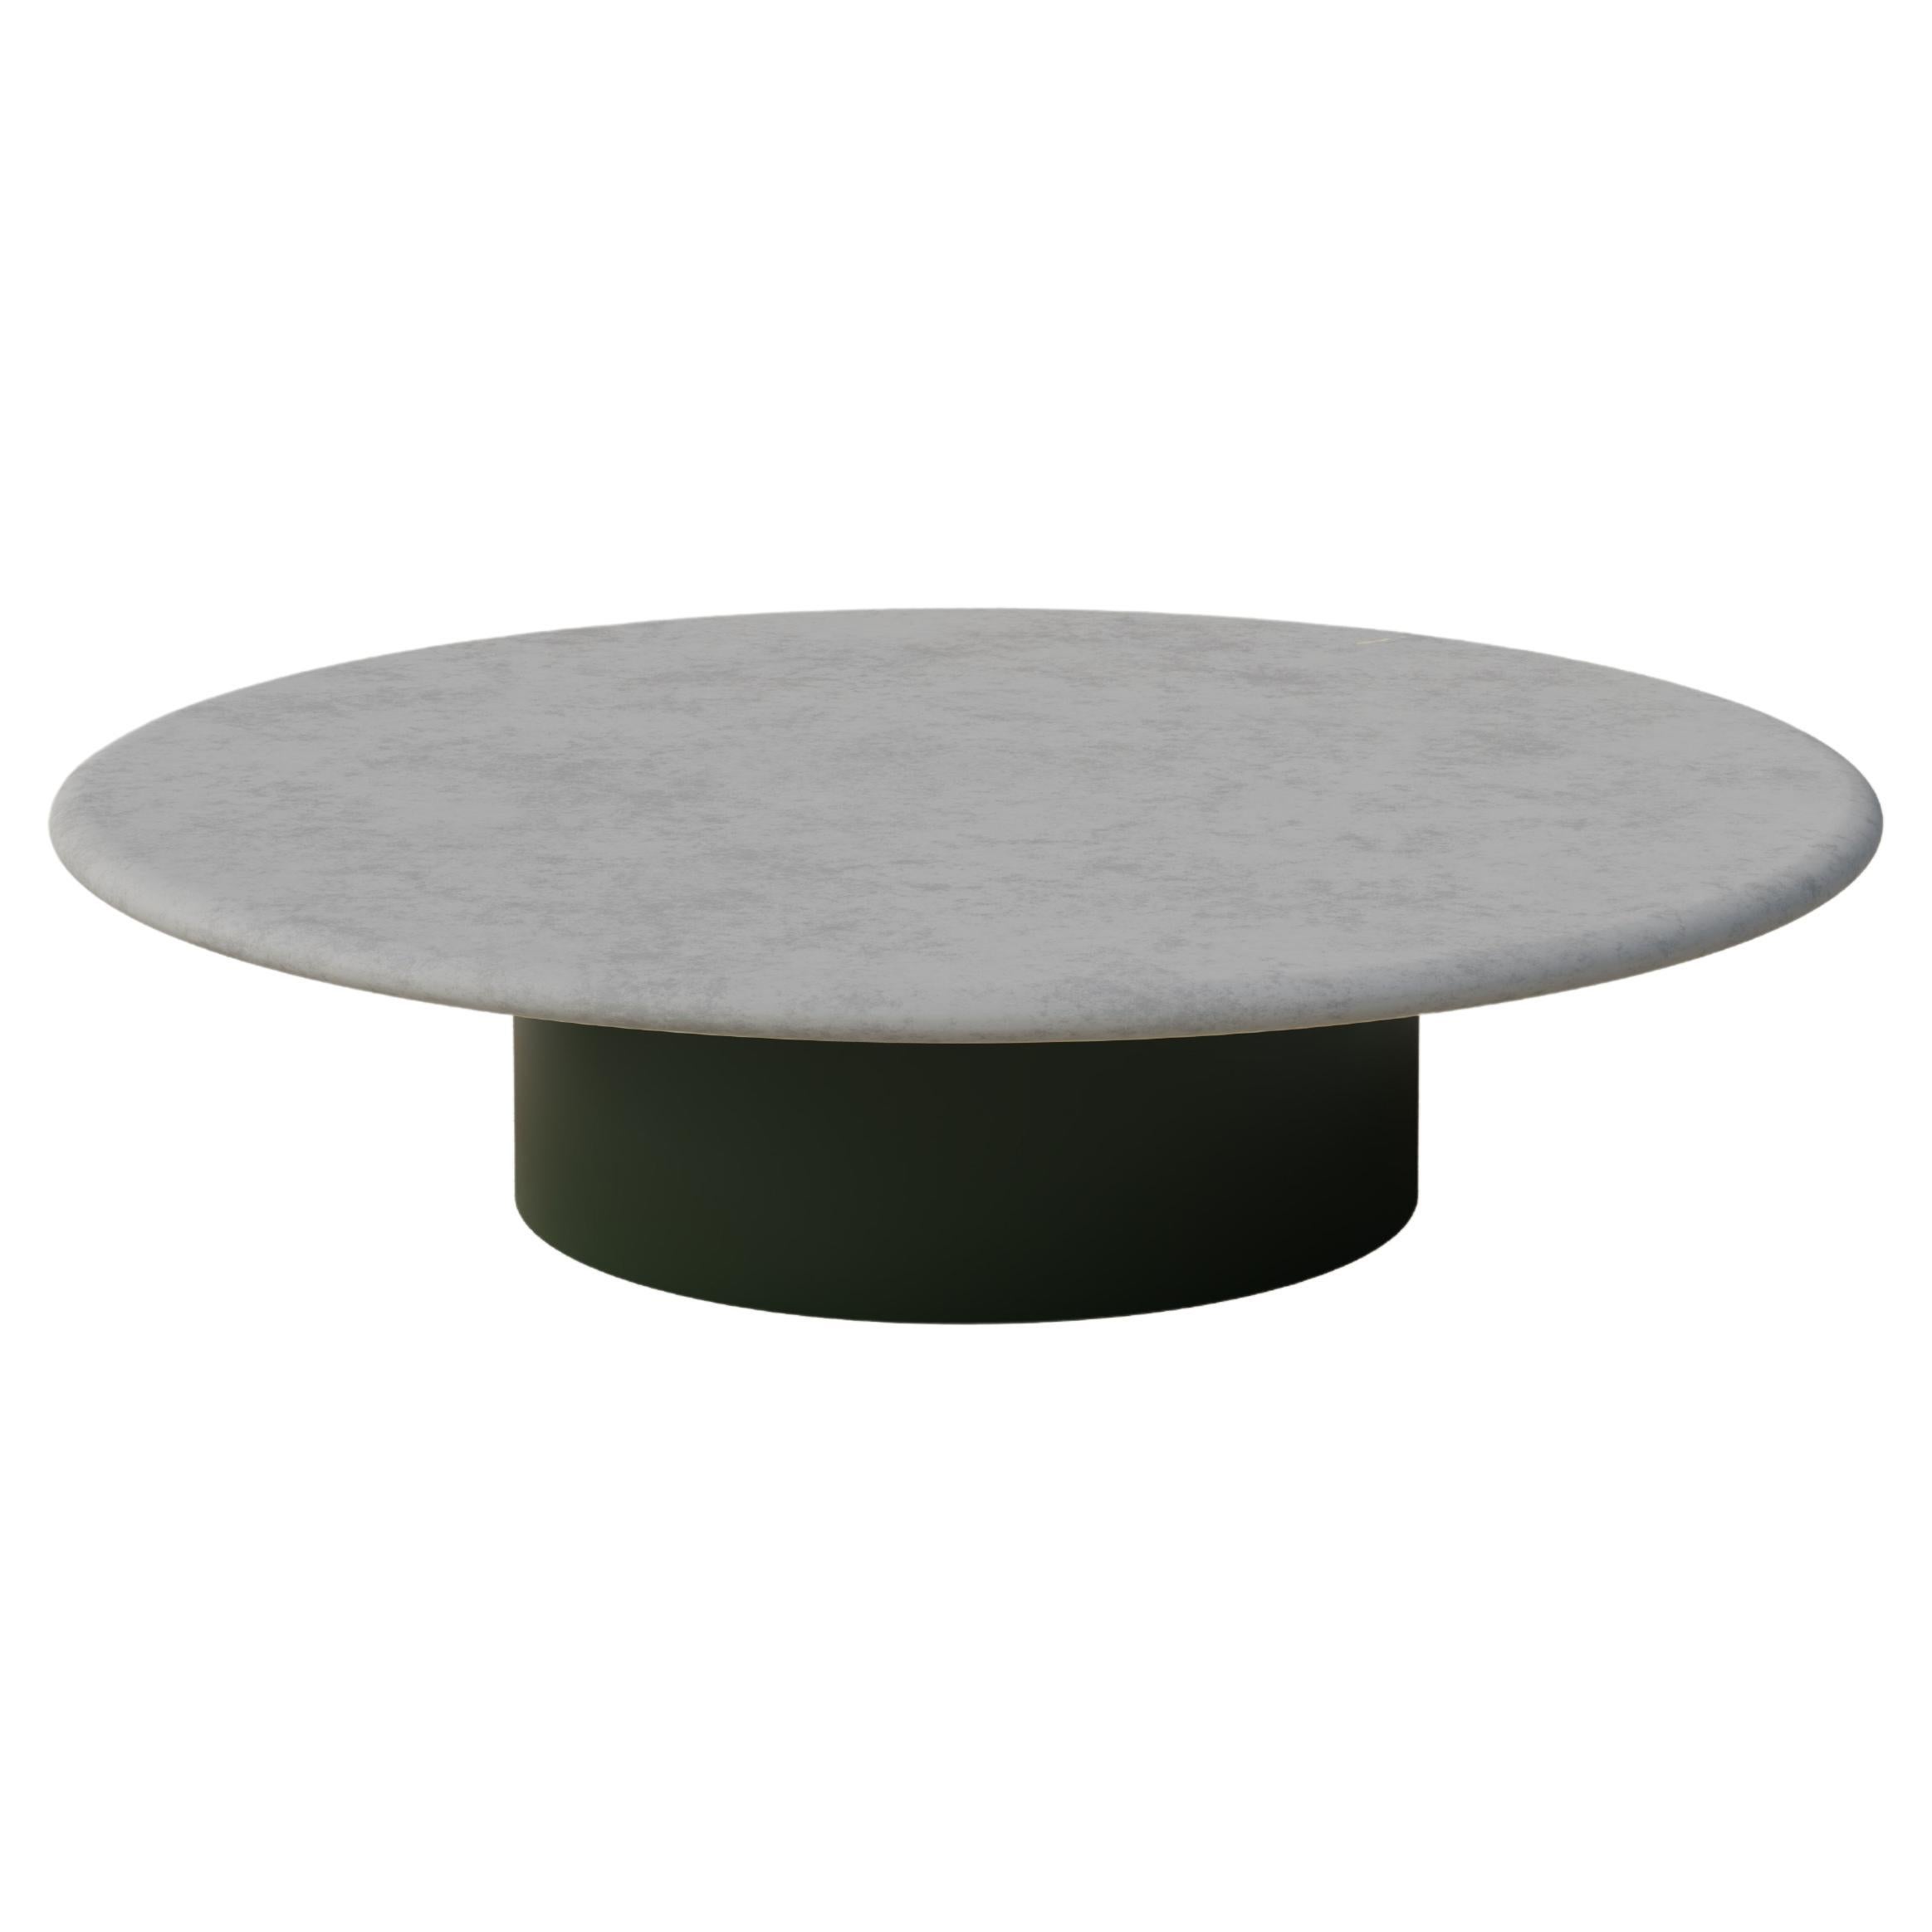 Raindrop Coffee Table, 1000, Microcrete / Moss Green For Sale